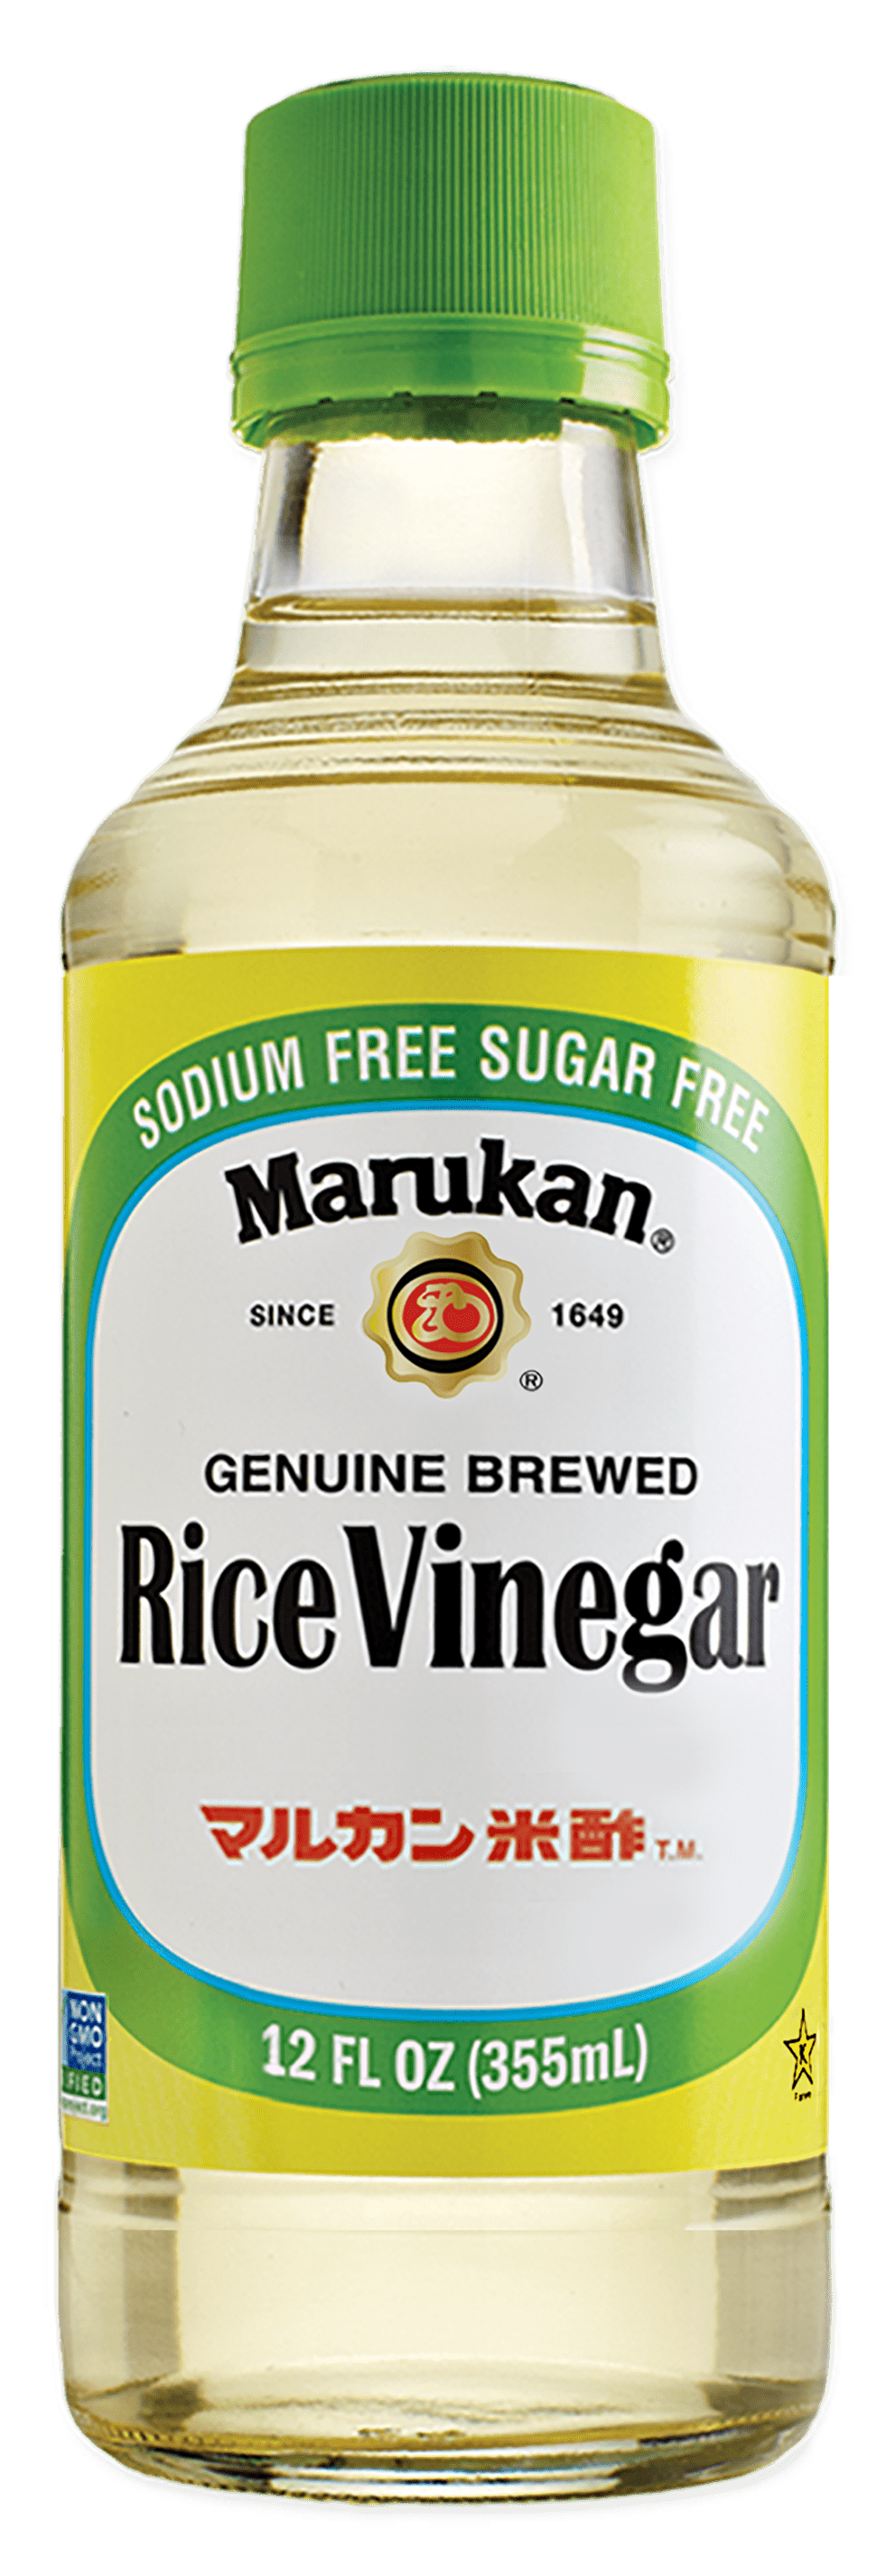 Bottle of Genuine Brewed Rice Vinegar